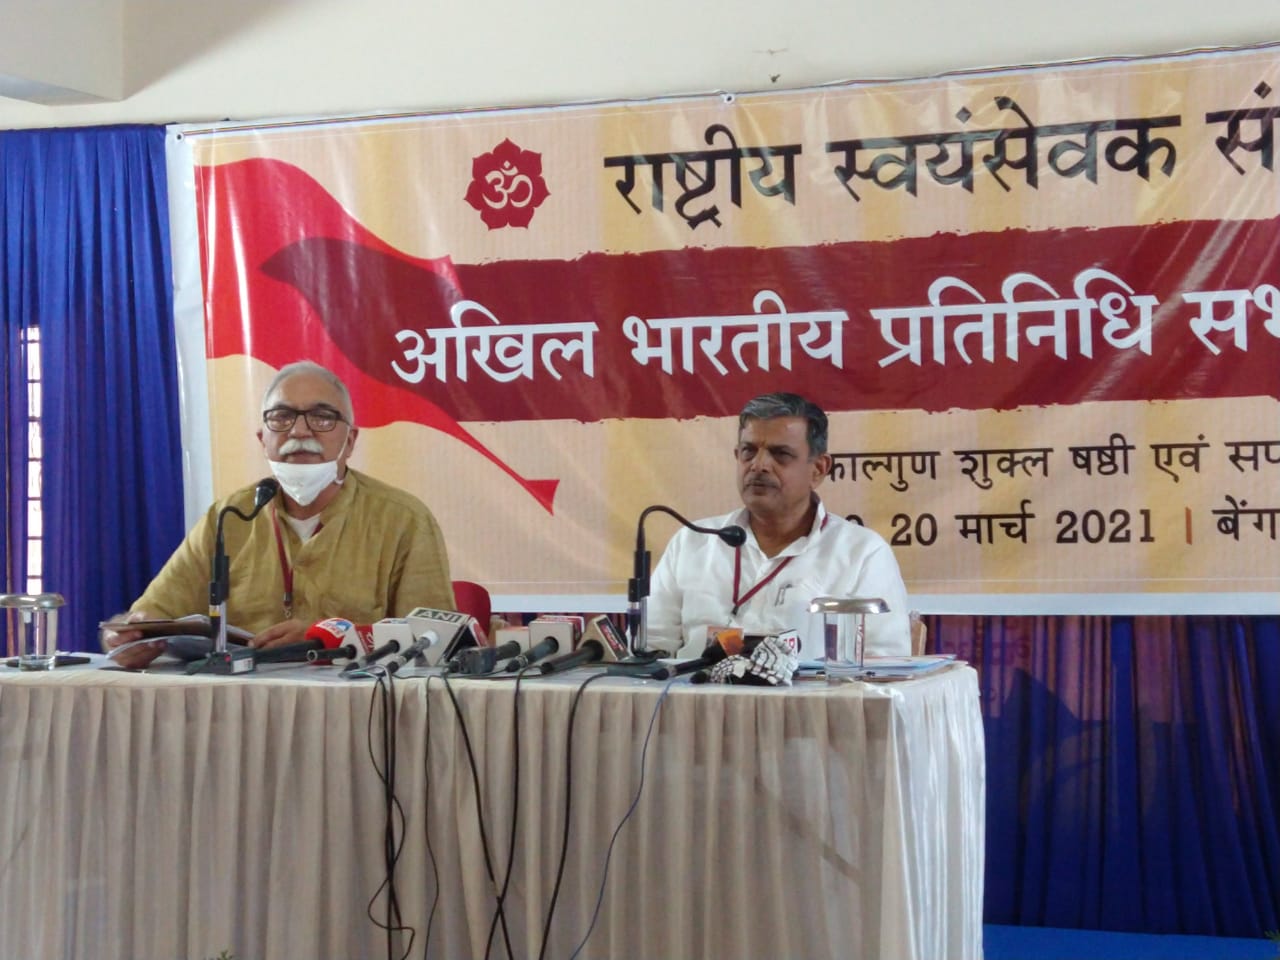 RSS to focus on Family Values, Environmental issues and Social Harmony – RSS Sarkaryavaha Dattatreya Hosabale